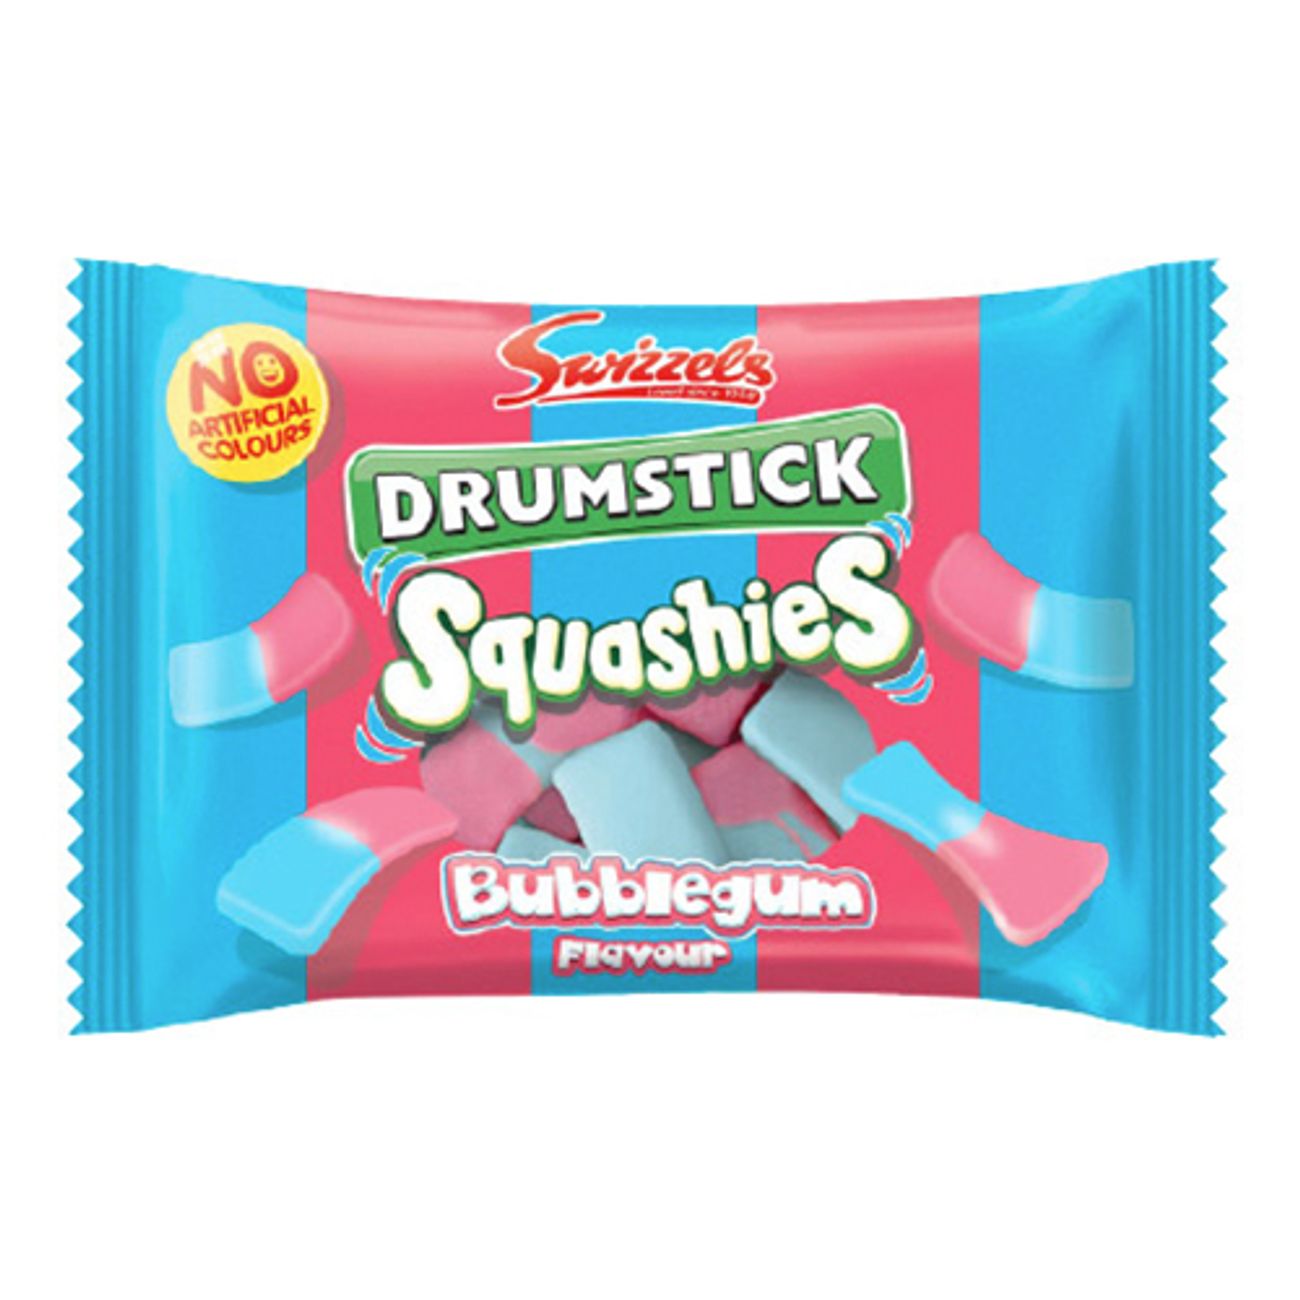 drumstick-squashies-bubbelgum-1